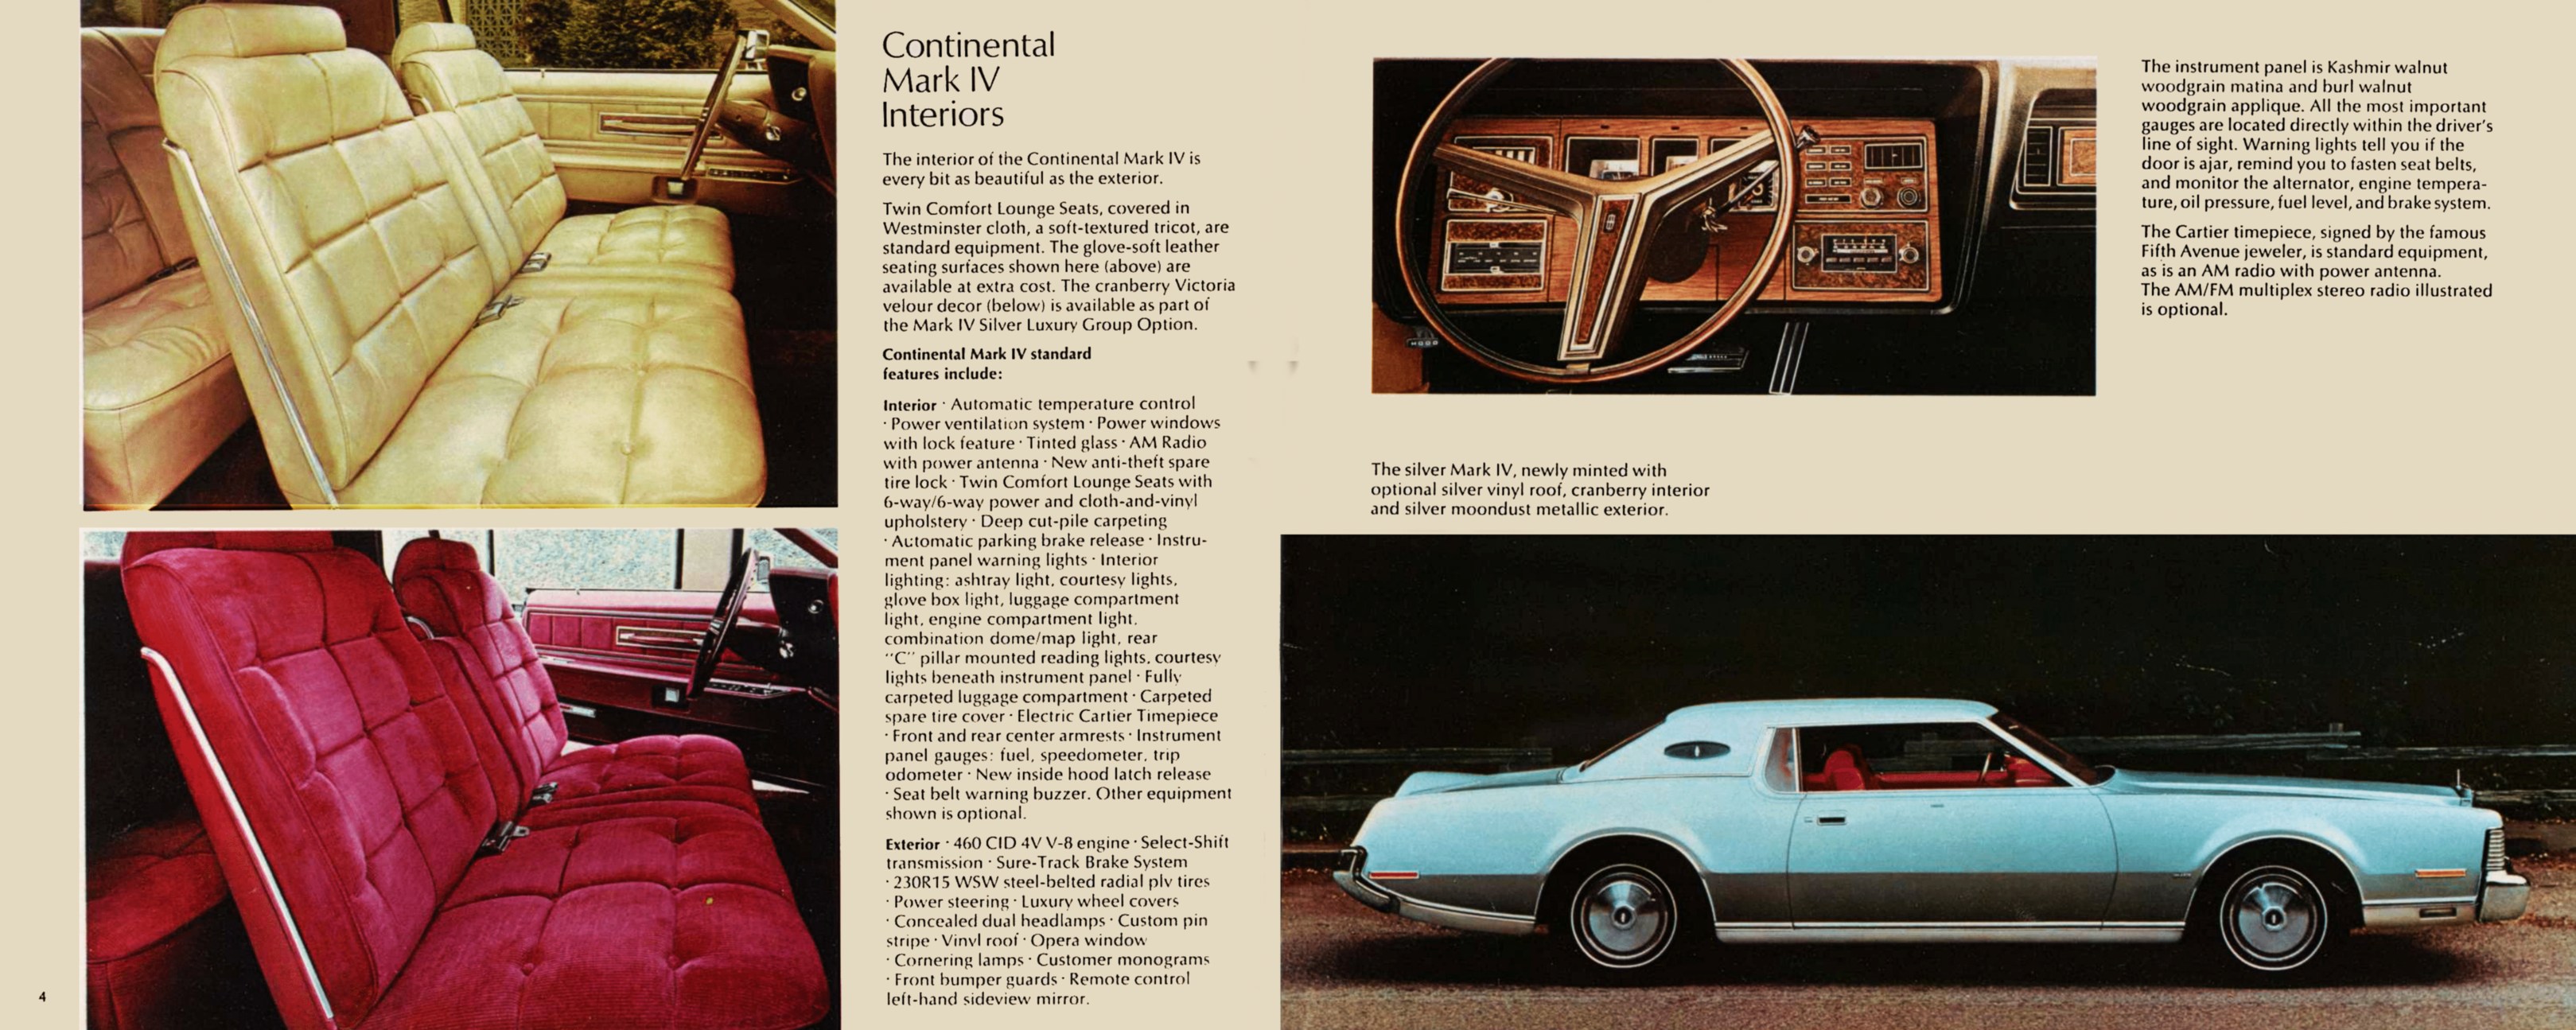 1973 Lincoln Mercury Full Line Brochure 04-05